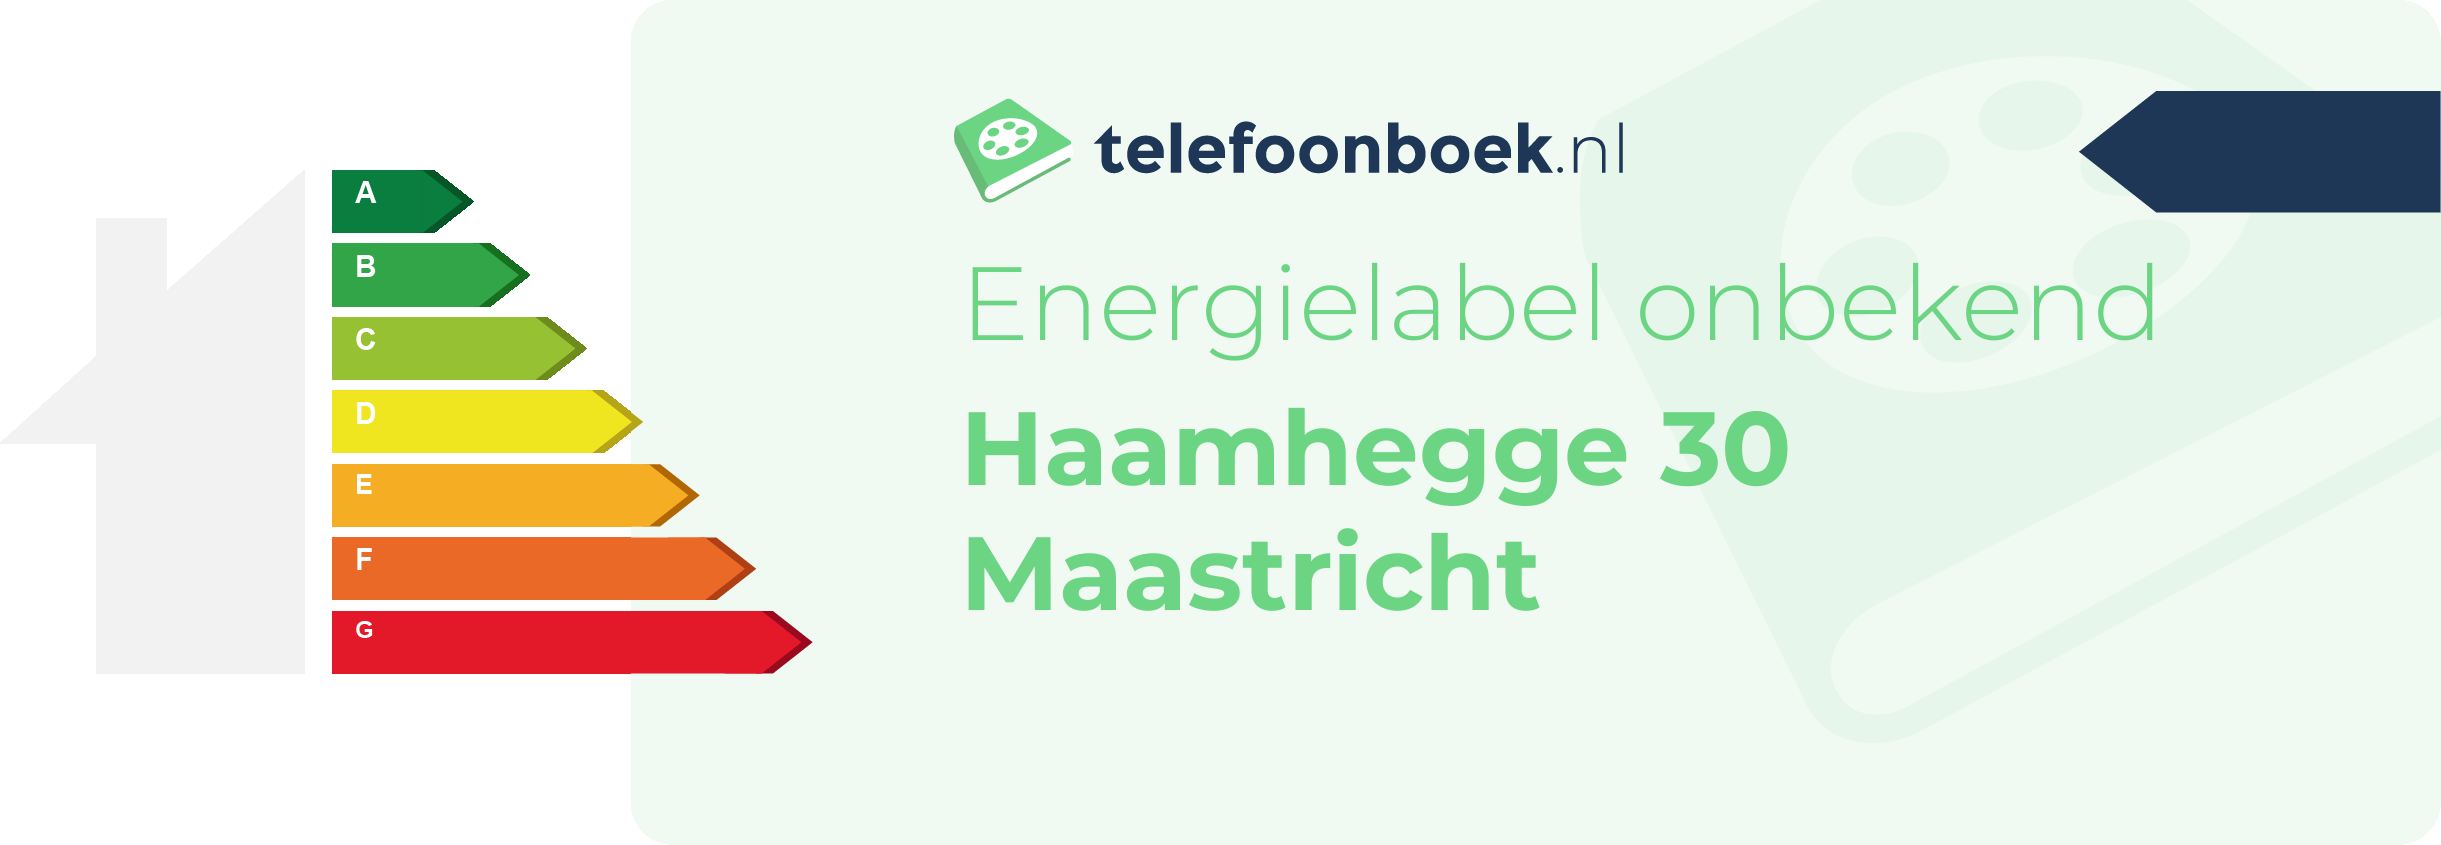 Energielabel Haamhegge 30 Maastricht